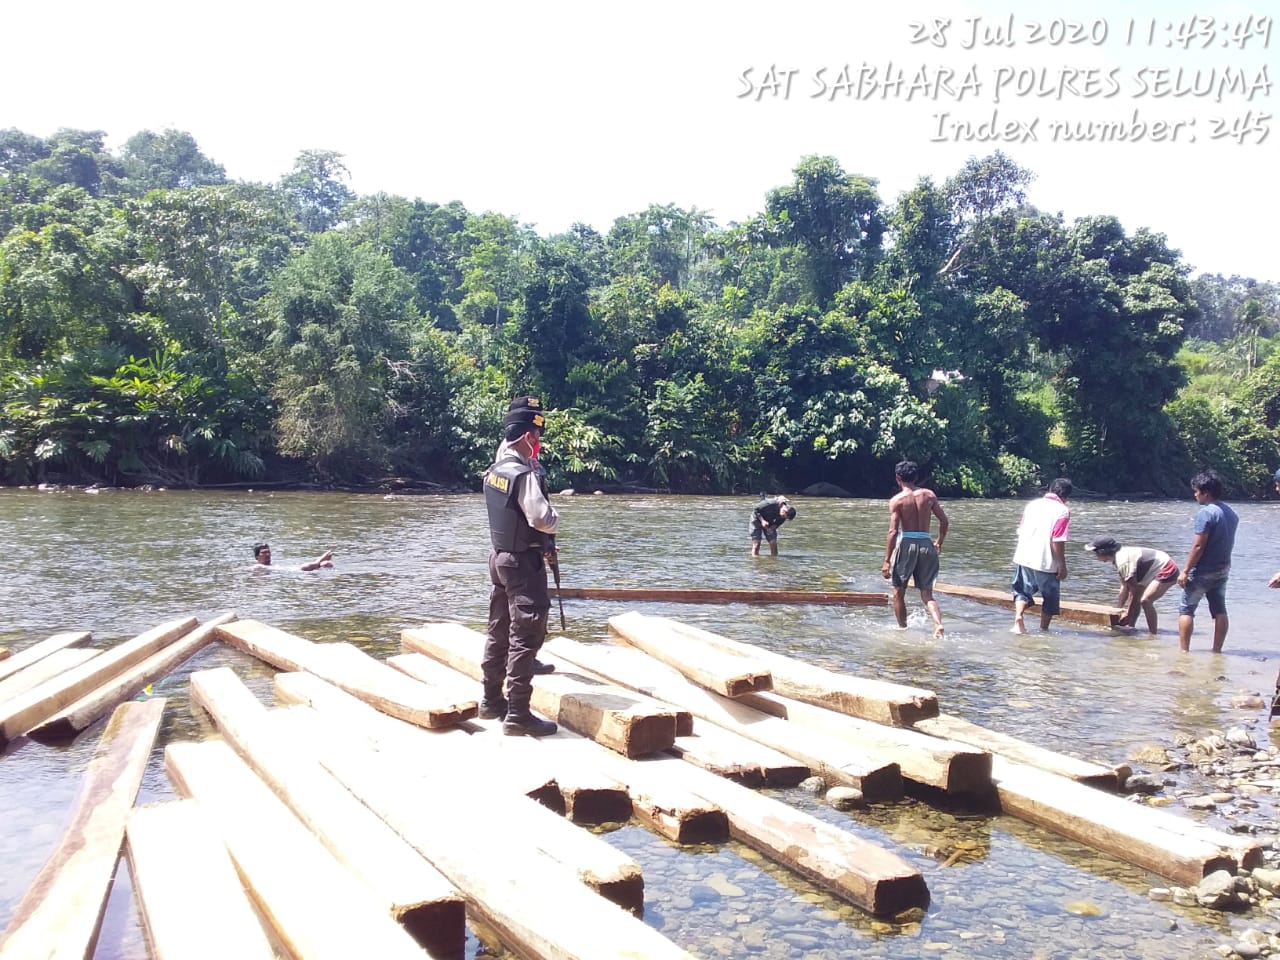 Polres Seluma Polda Bengkulu Amankan 150 Batang Balok Kayu Dari Sungai Napalan